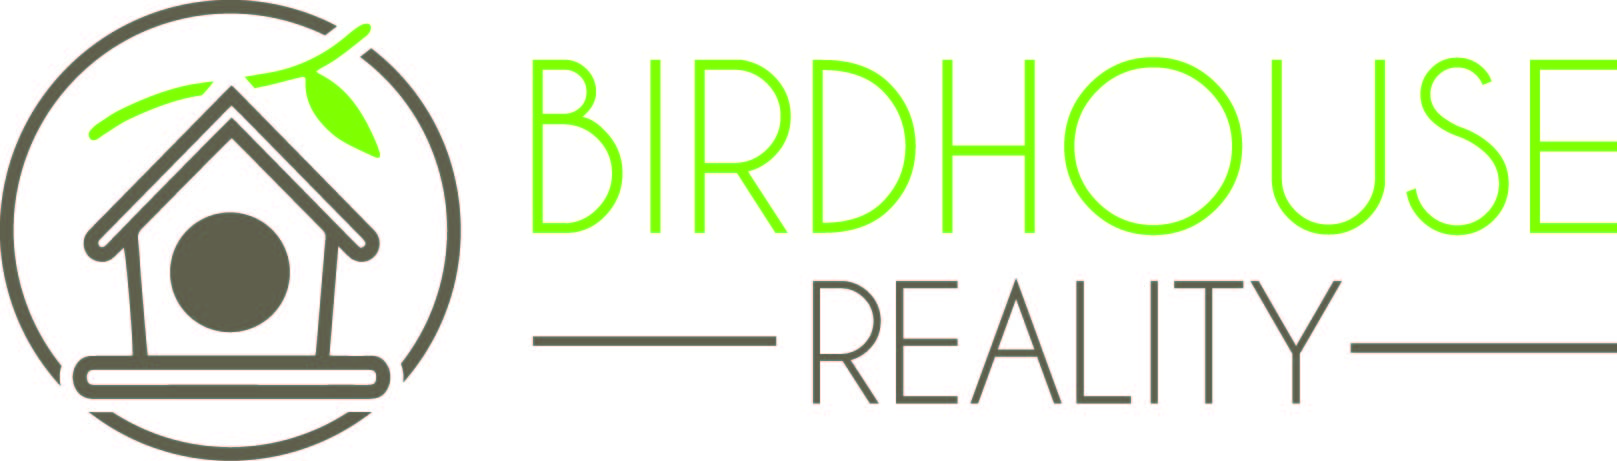 Birdhouse Reality